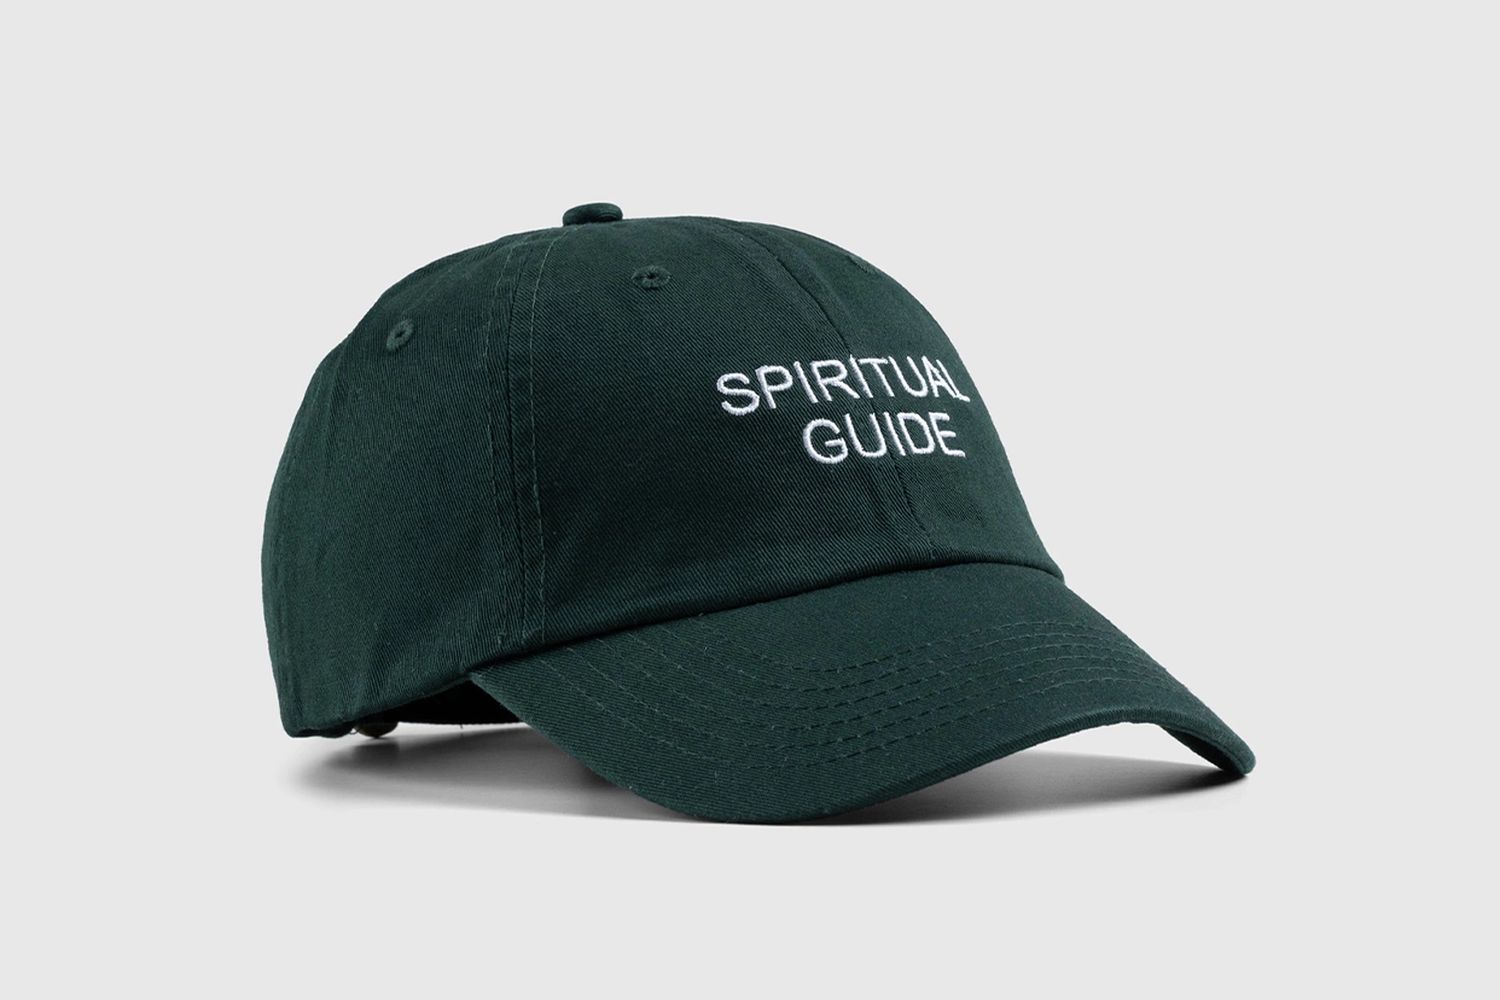 Spiritual Guide Cap